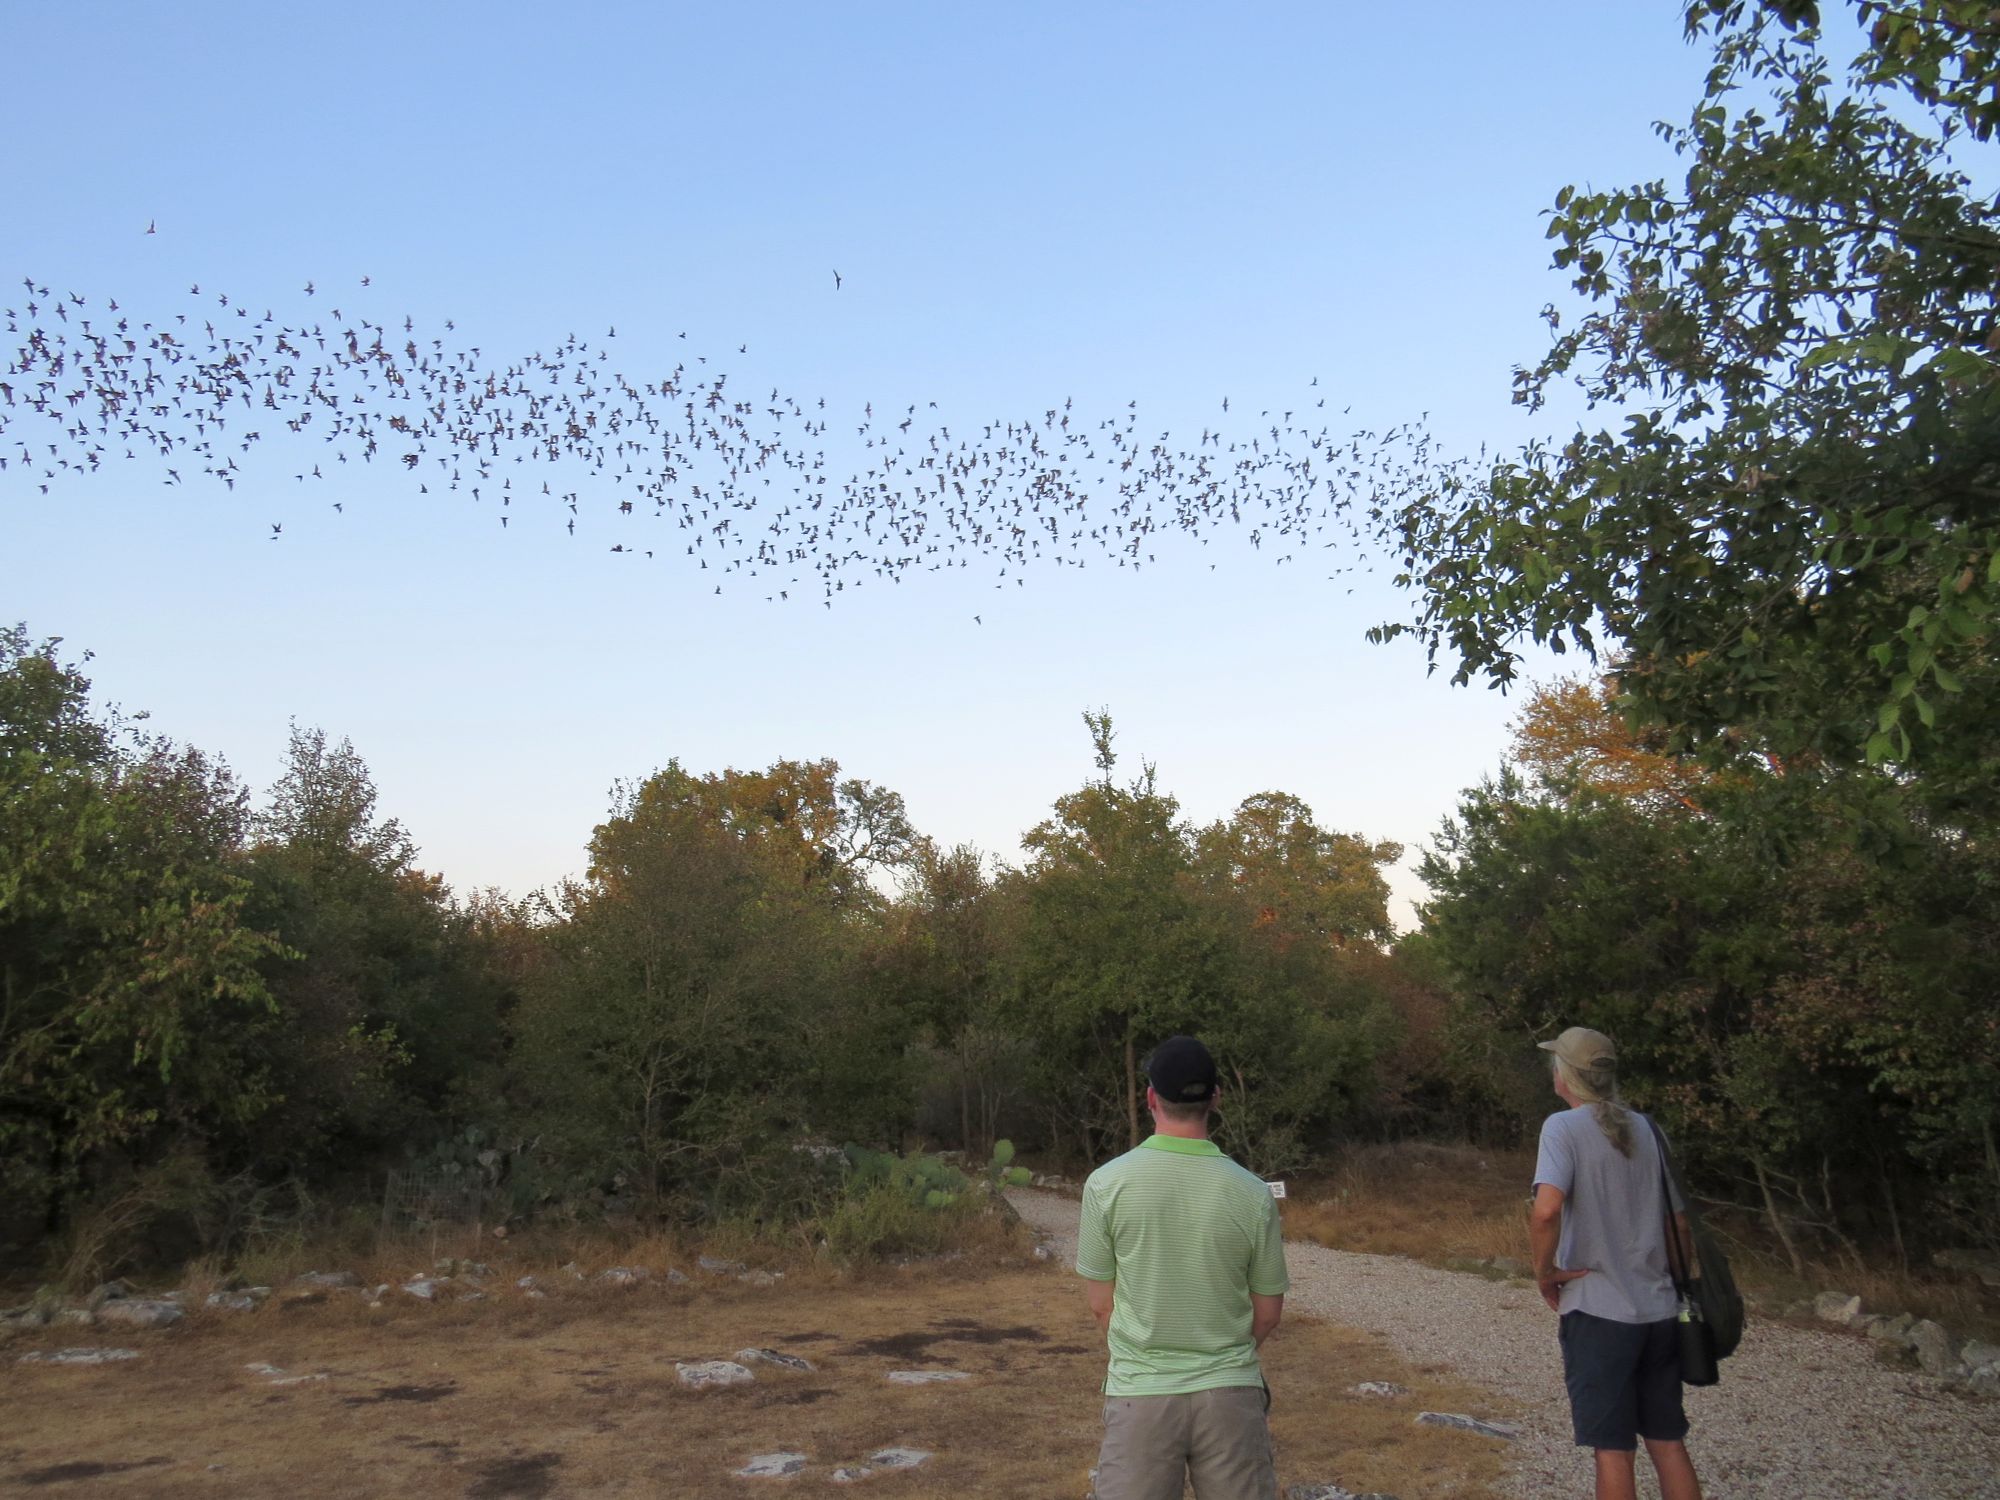 Bats Overhead